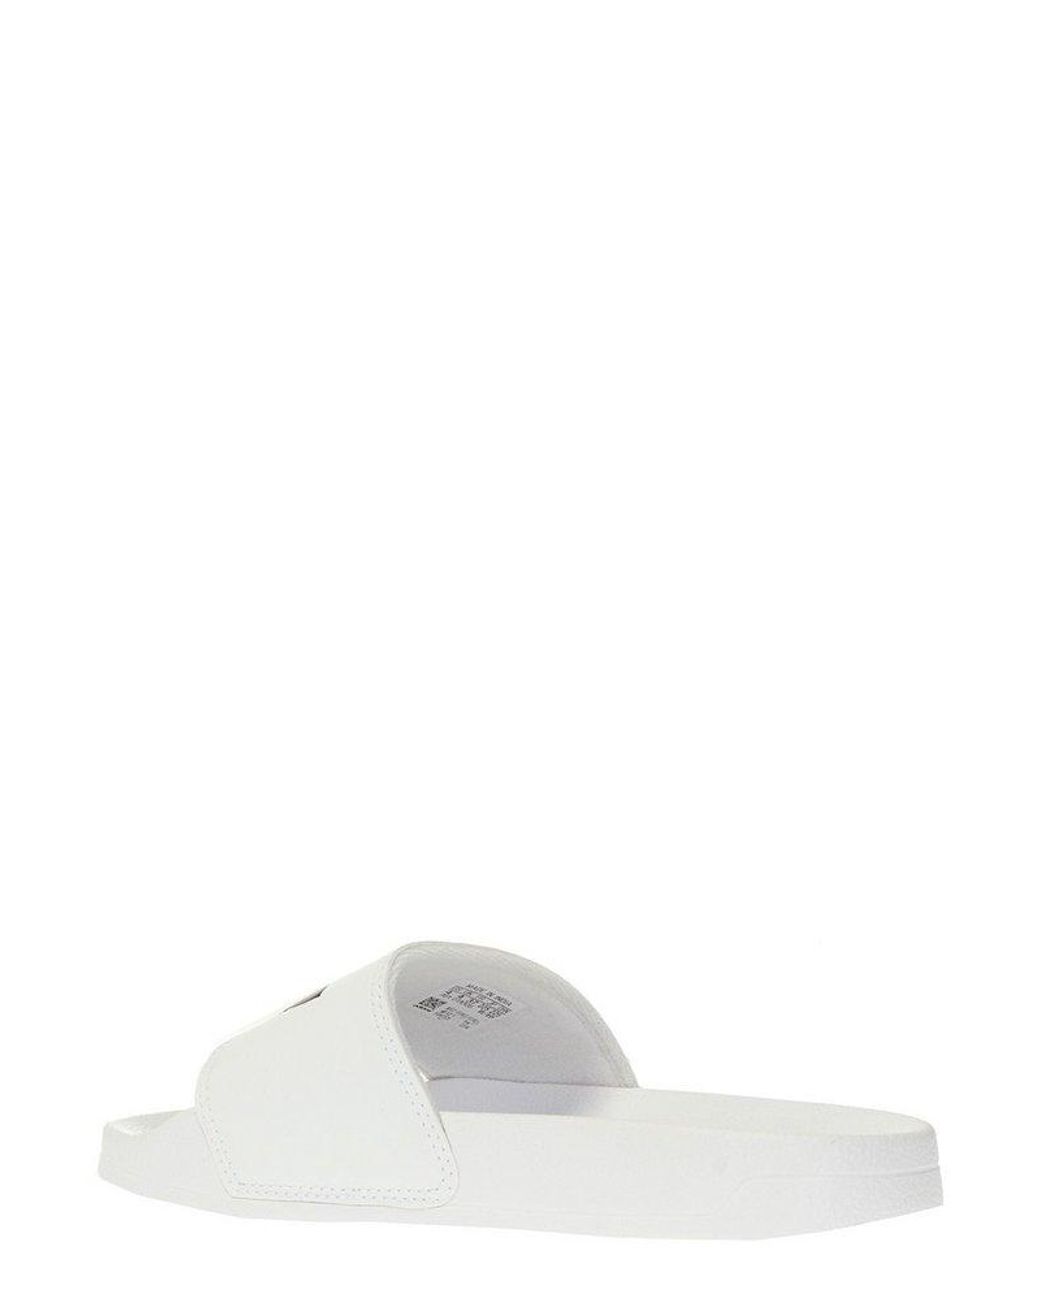 adidas Originals Adilette Lite Slip-on Slides in White | Lyst